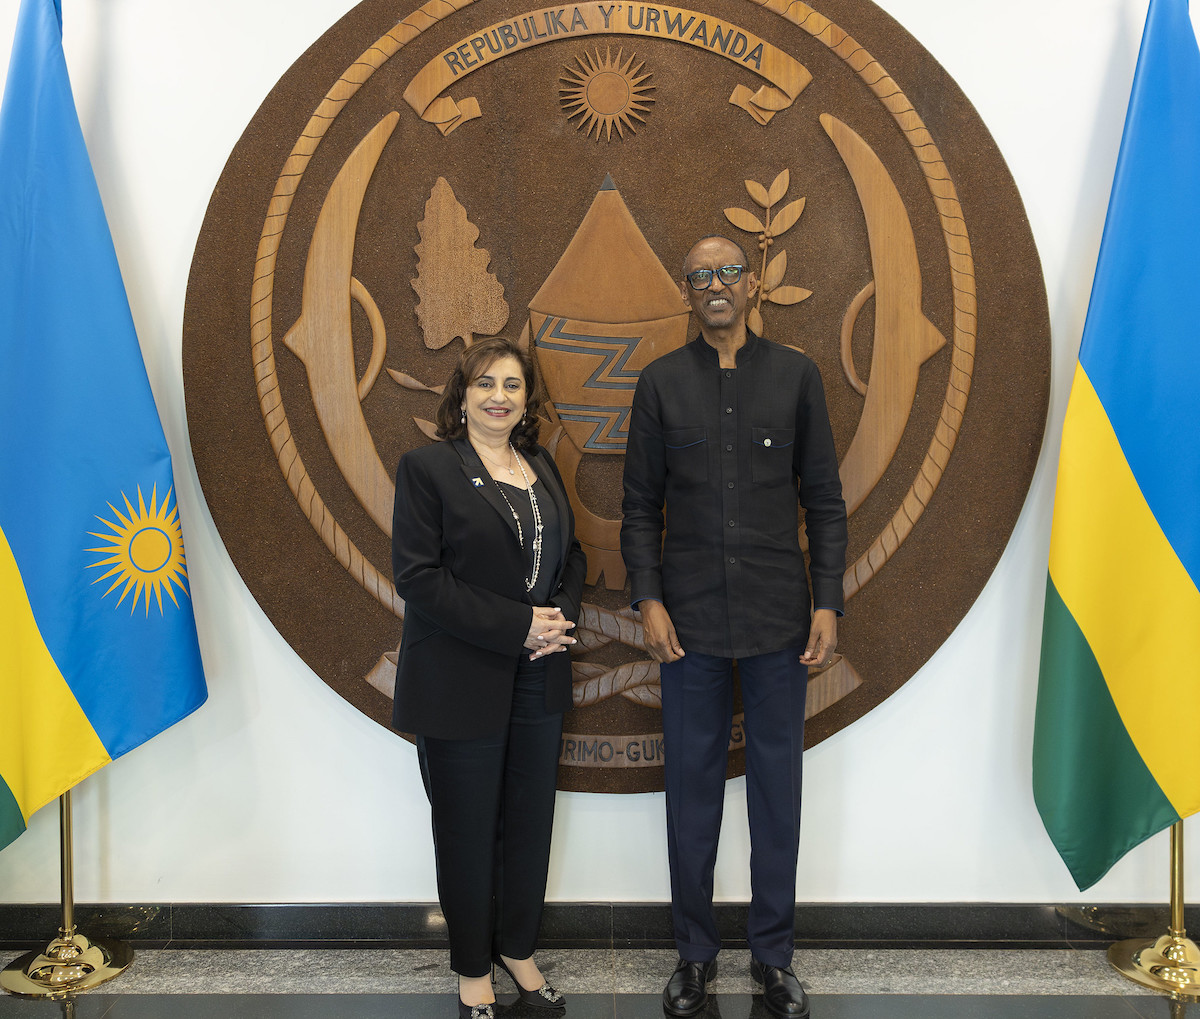 UN Women Executive Director Bahous with President Paul Kagame of Rwanda. Photo courtesy of the Office of the President of Rwanda